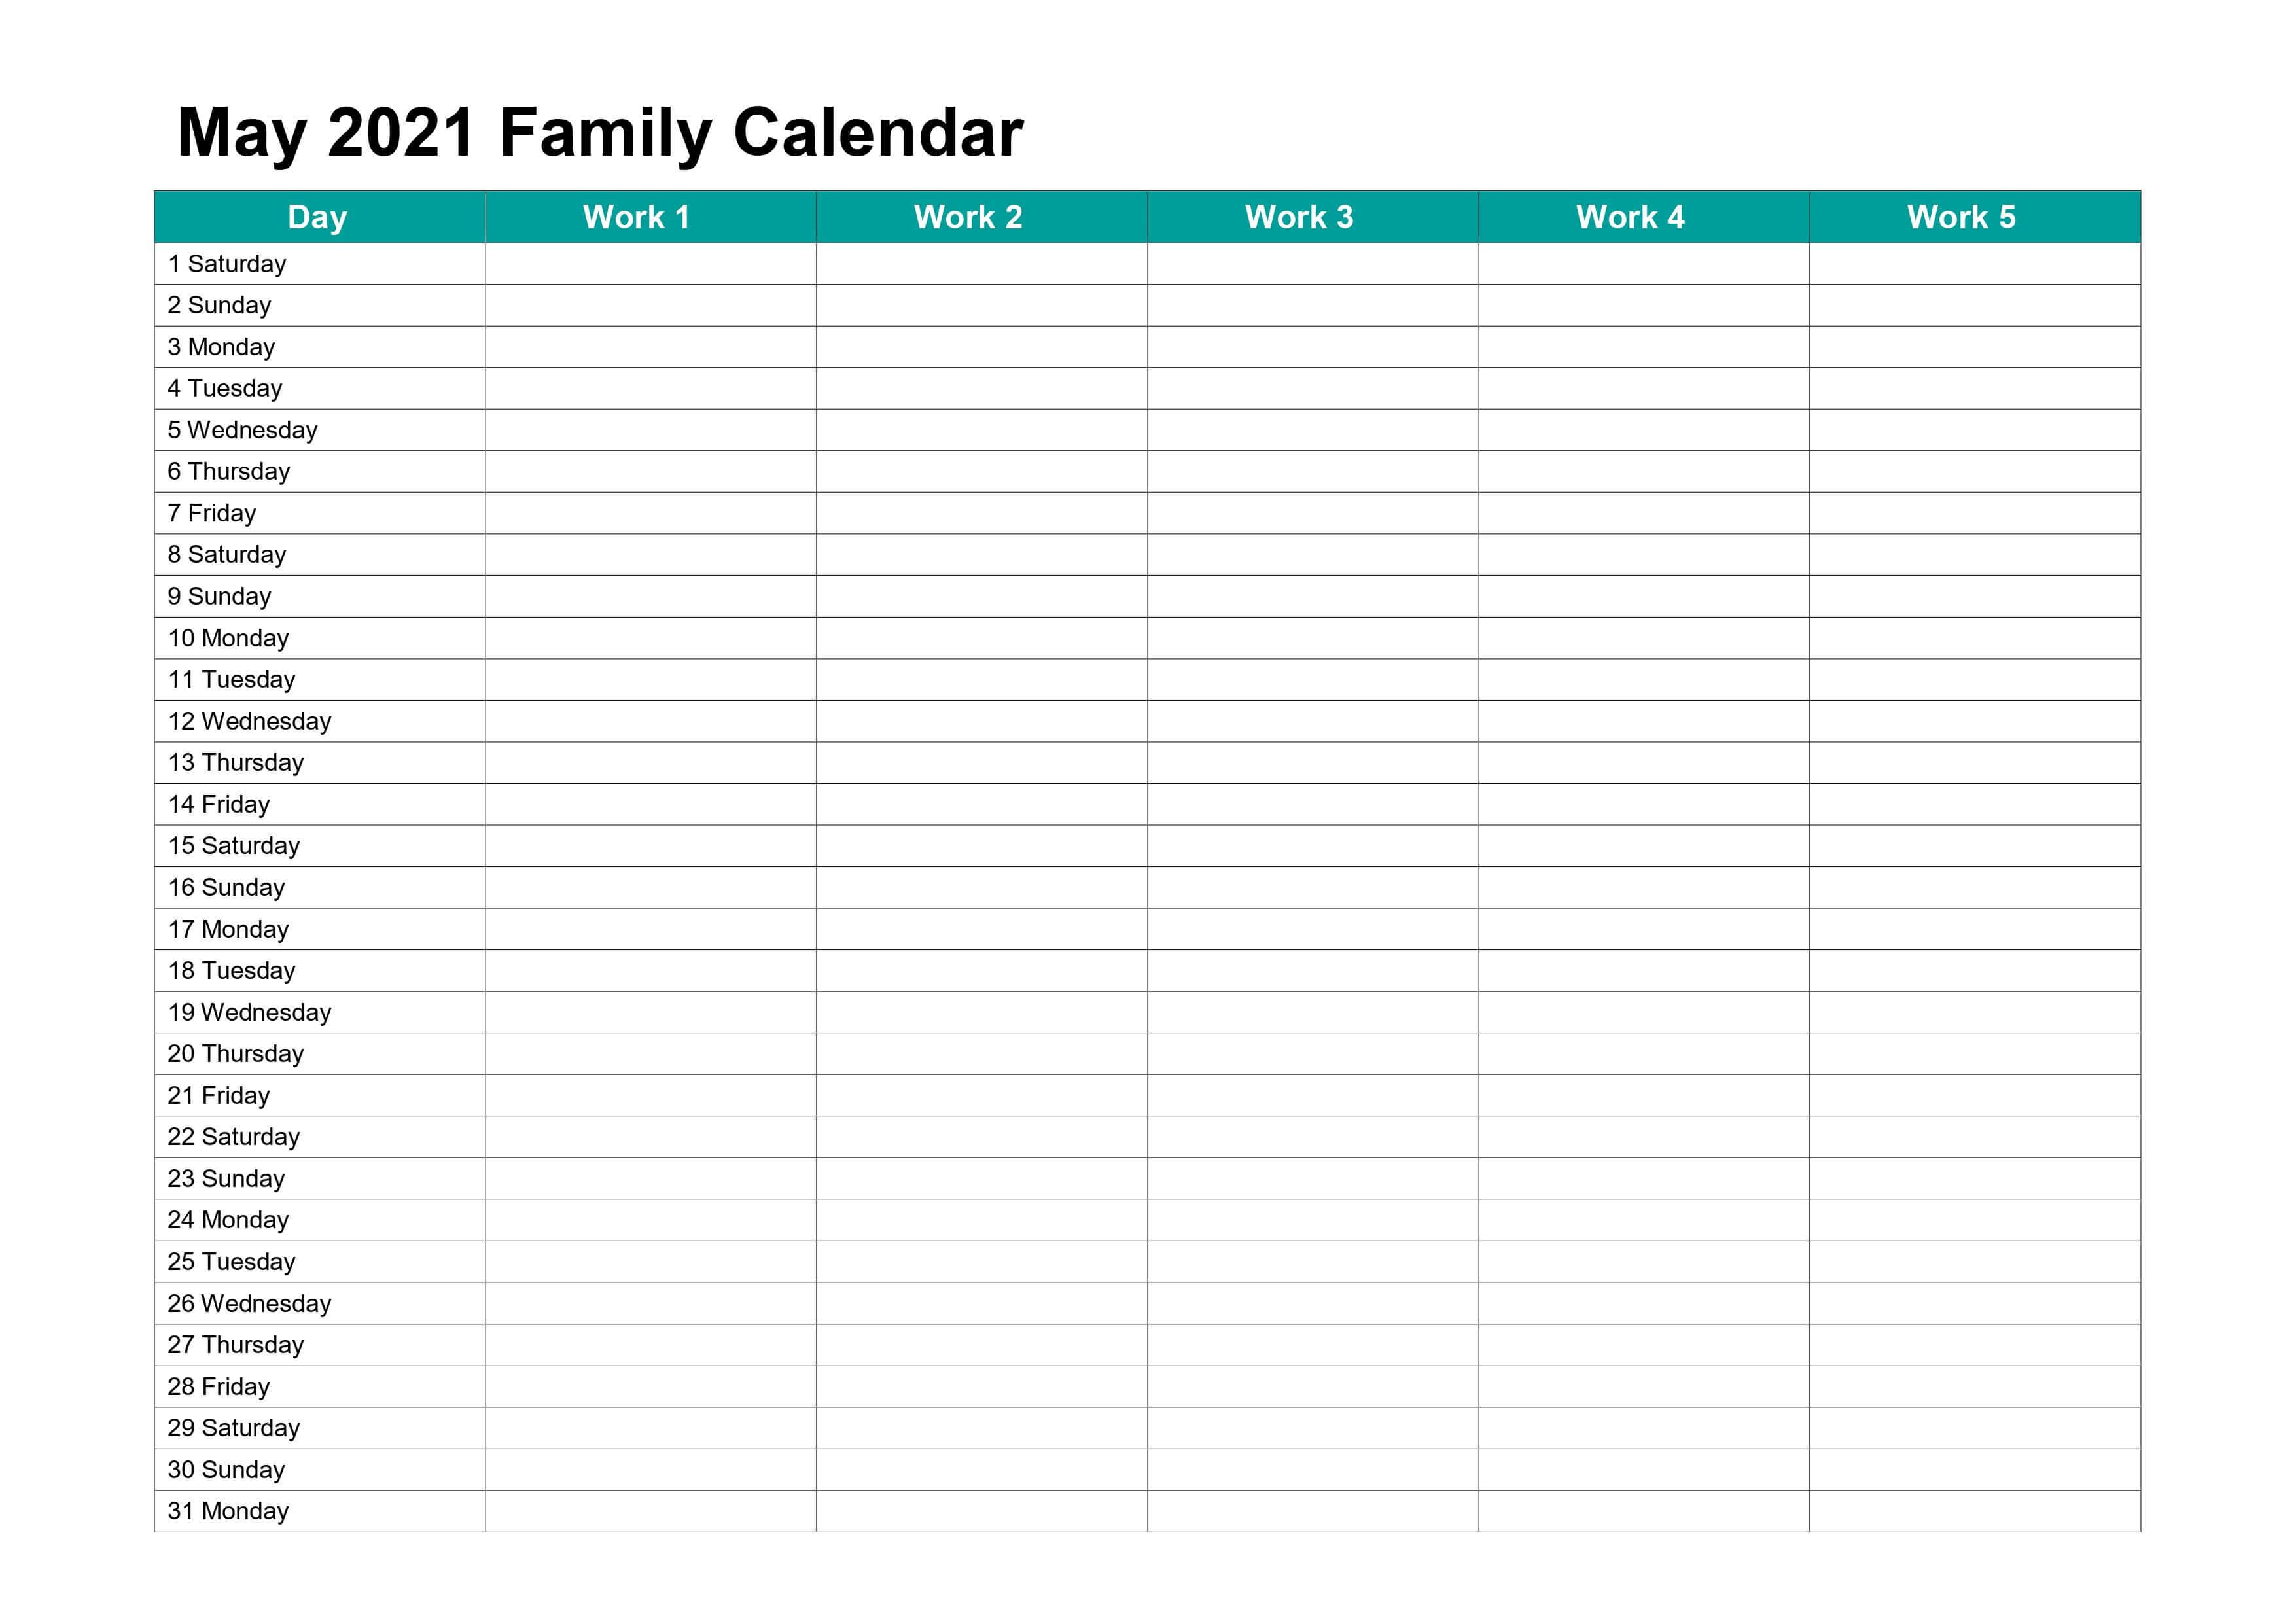 Blank May 2021 Family Calendar